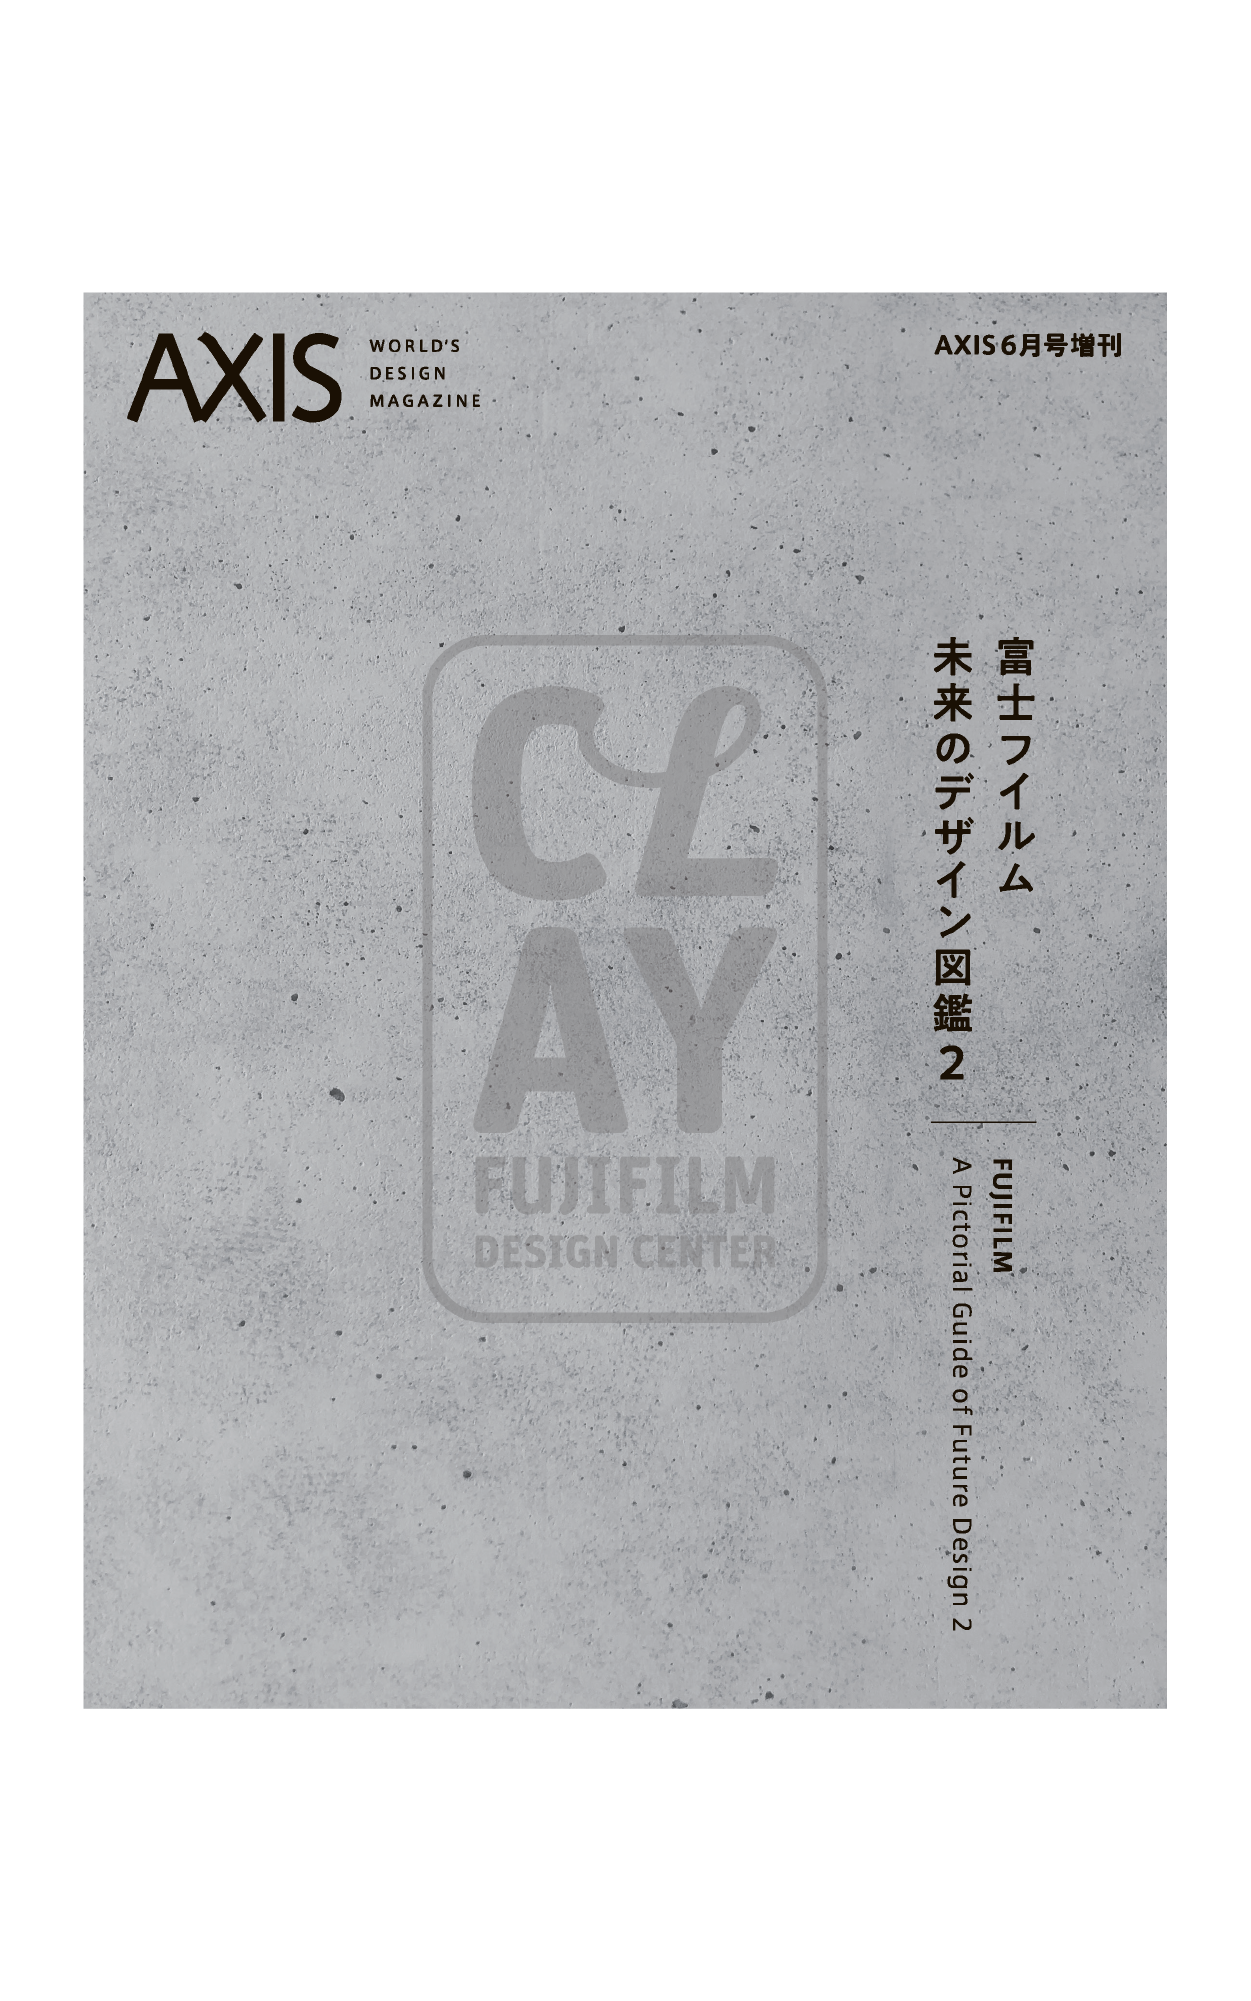 AXIS増刊号「富士フイルム 未来のデザイン図鑑 2」